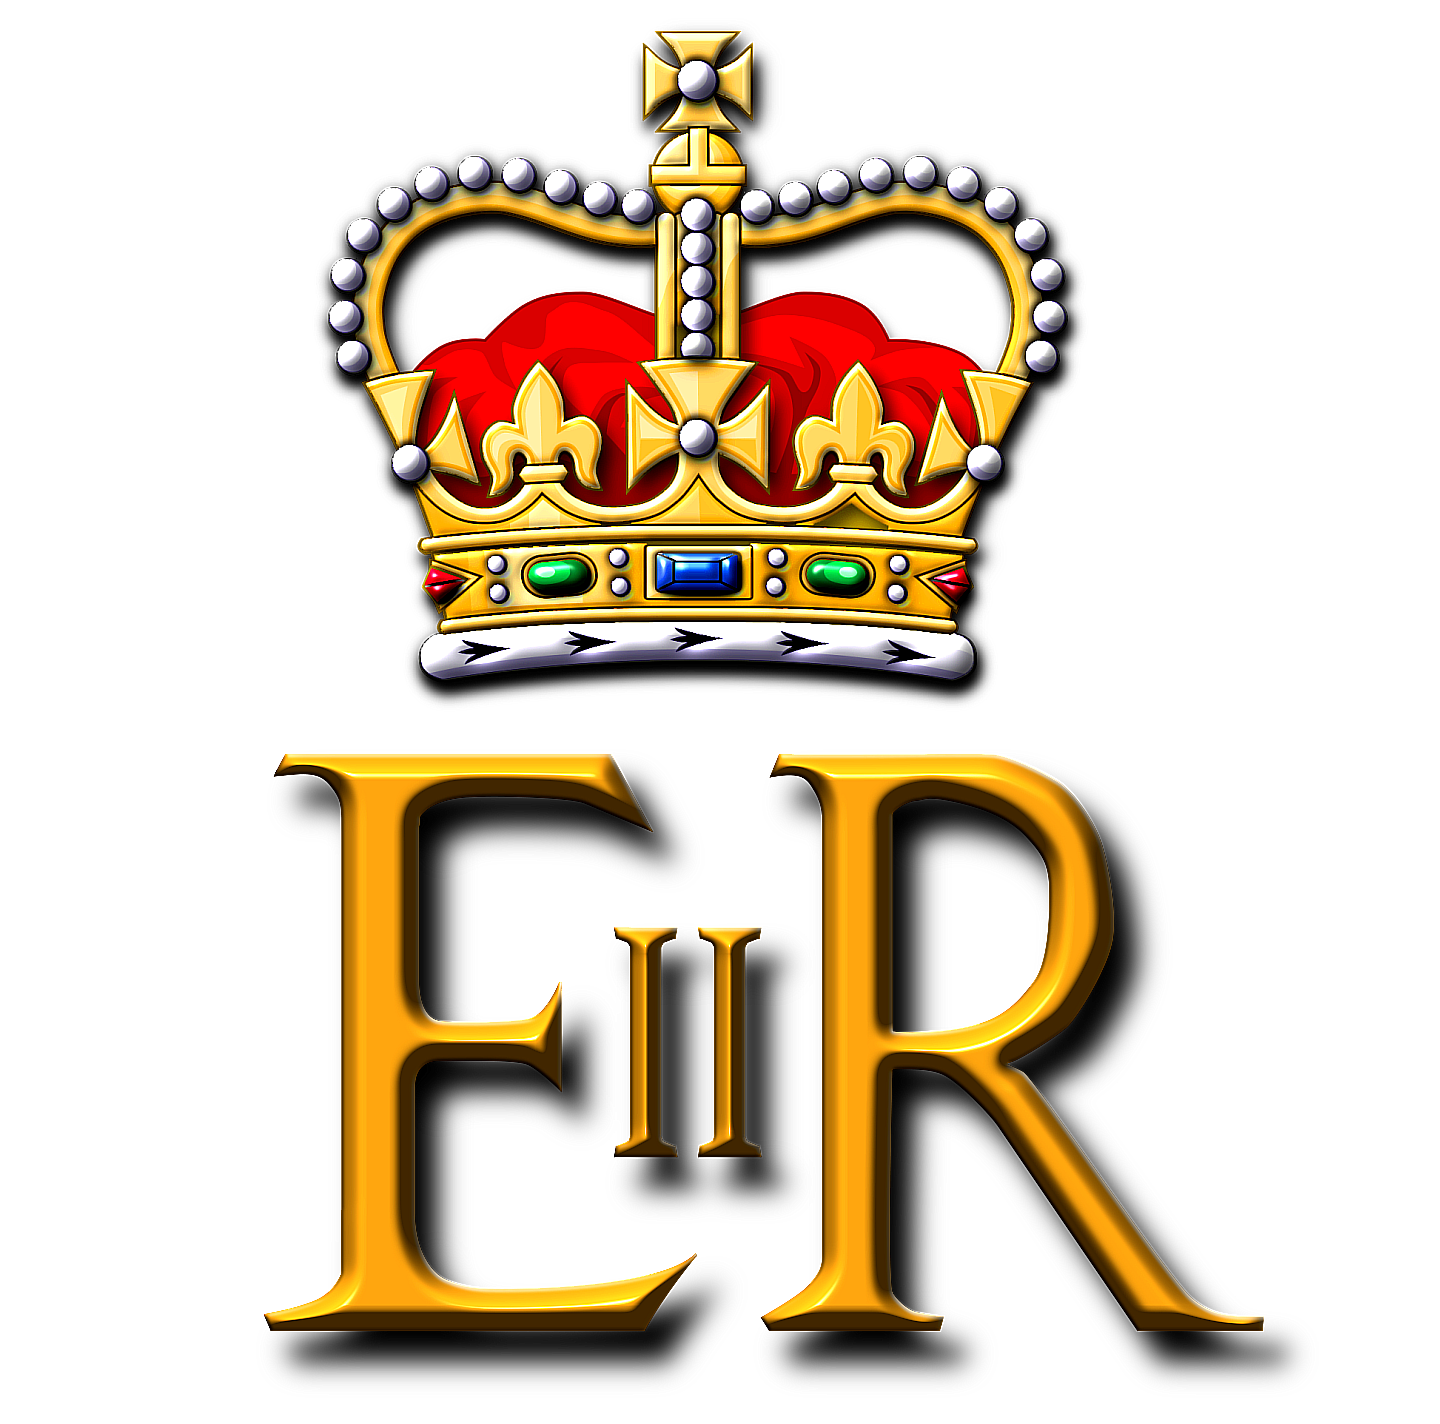 Royal Cypher - Queen Elizabeth II - Art of Heraldry - Peter Crawford.png